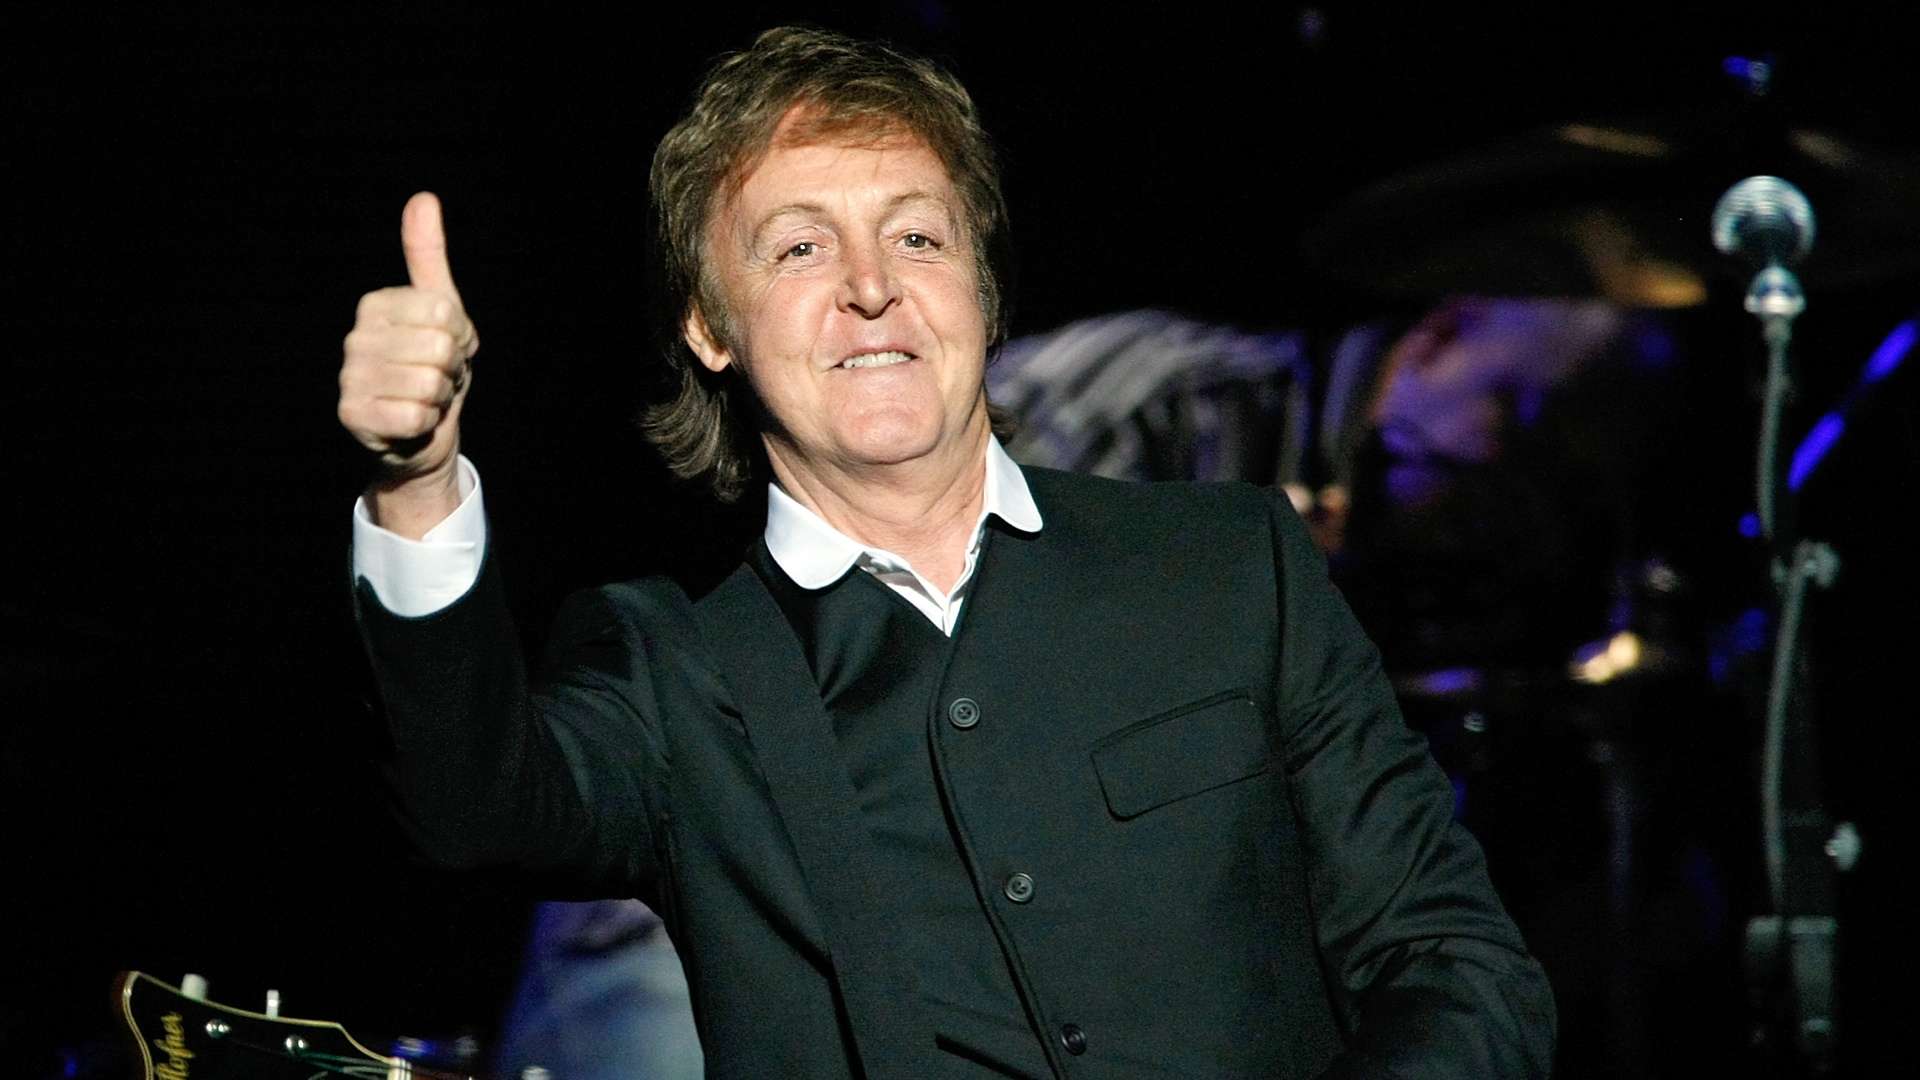 Paul McCartney [Image Source]